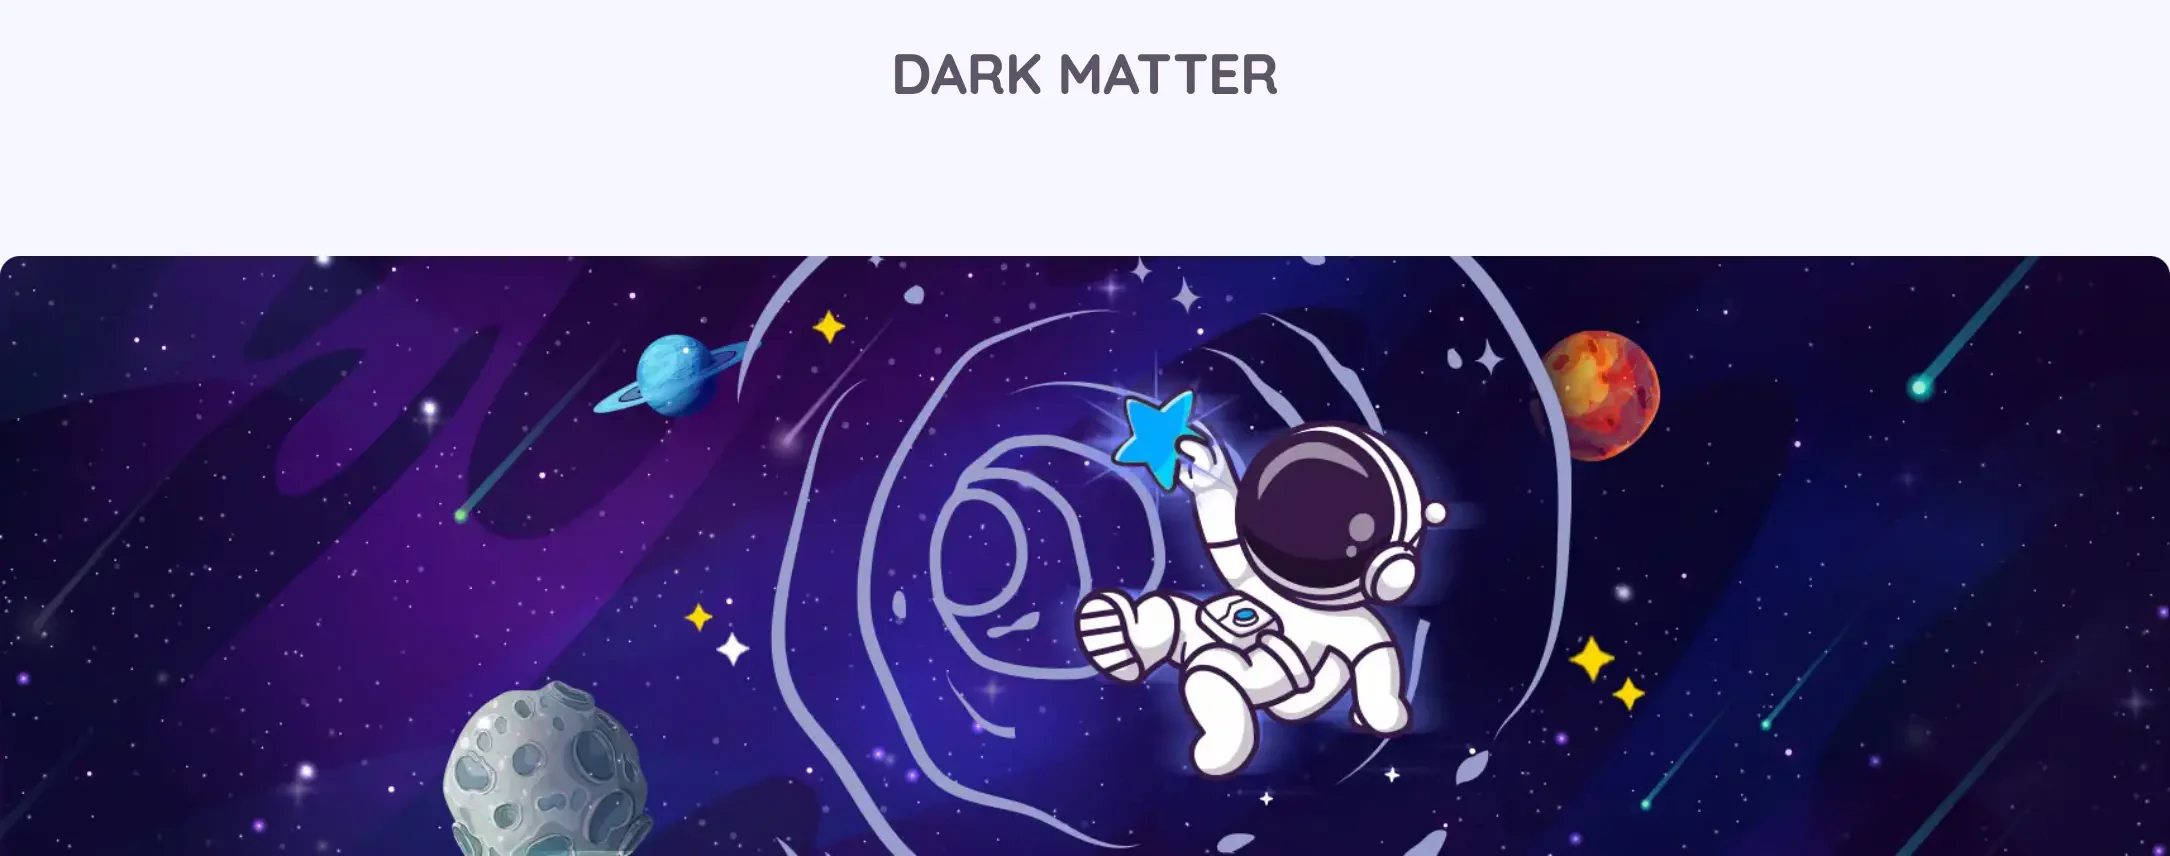 bonus dark matter jackpot bob